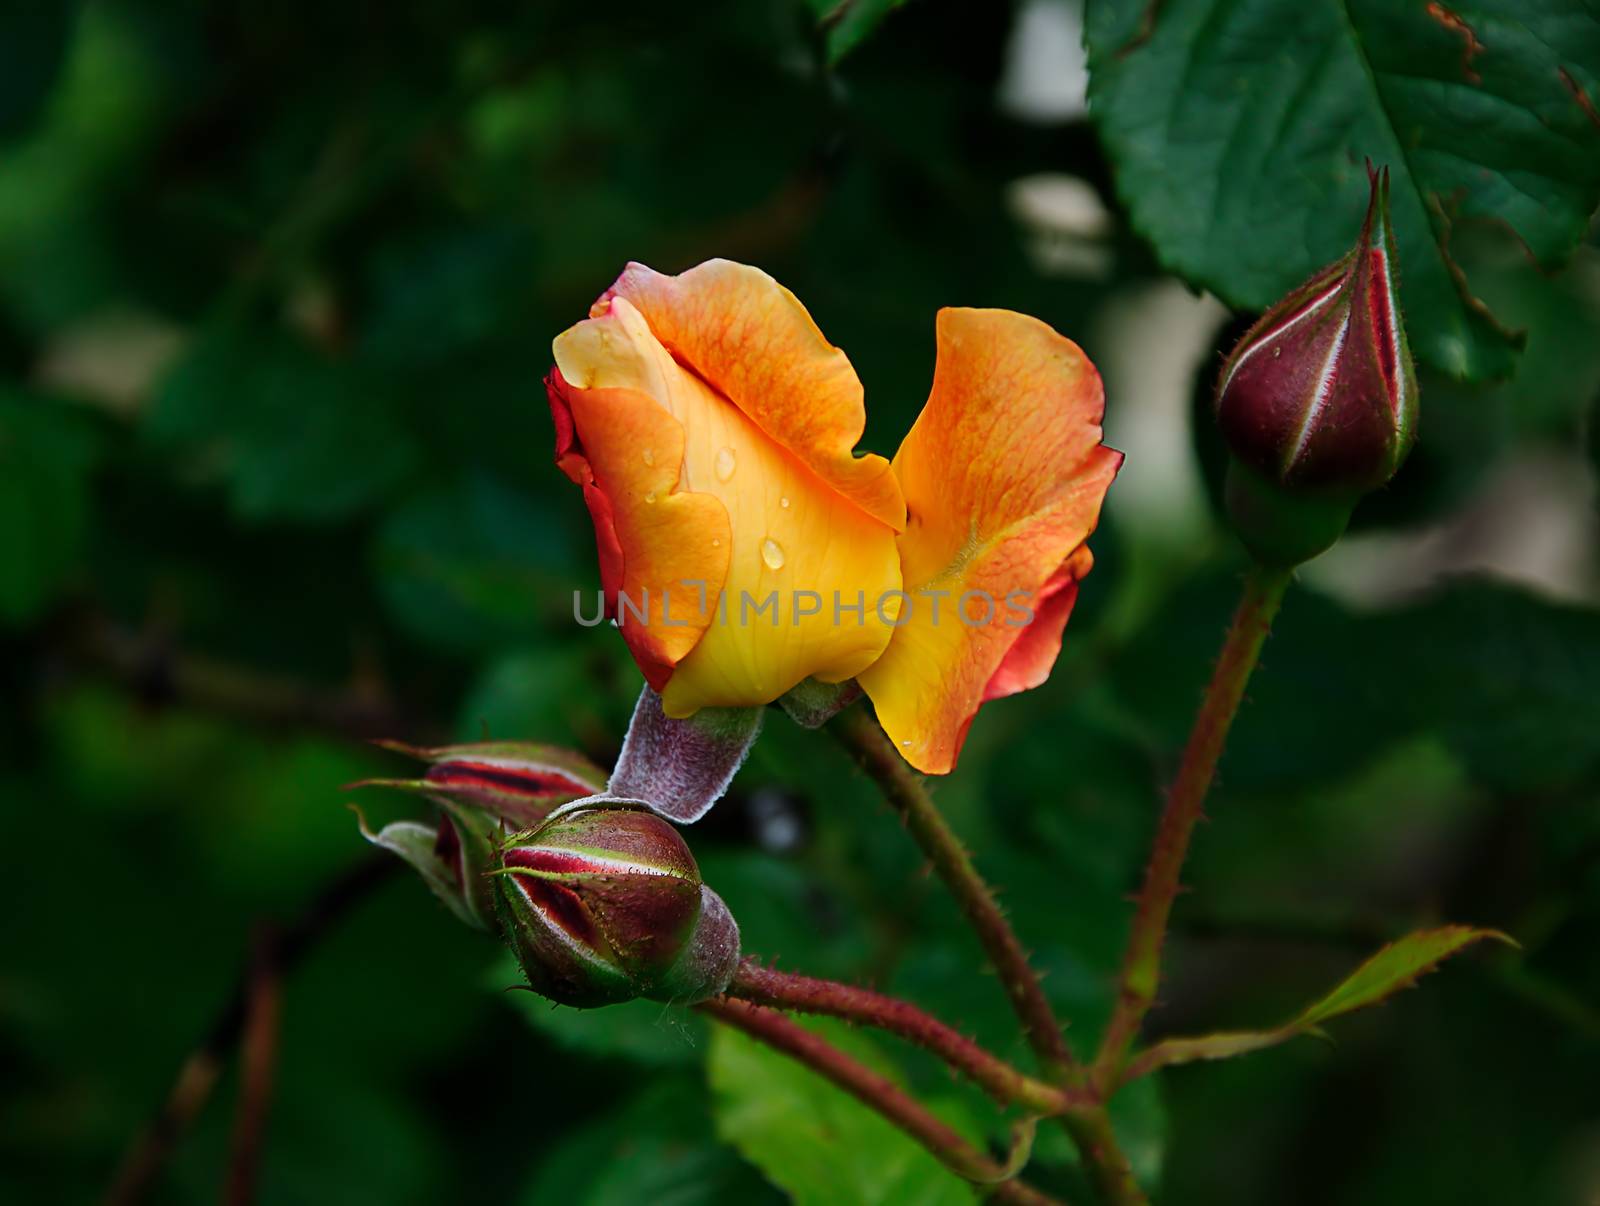 beautiful rose with rain drops macro view